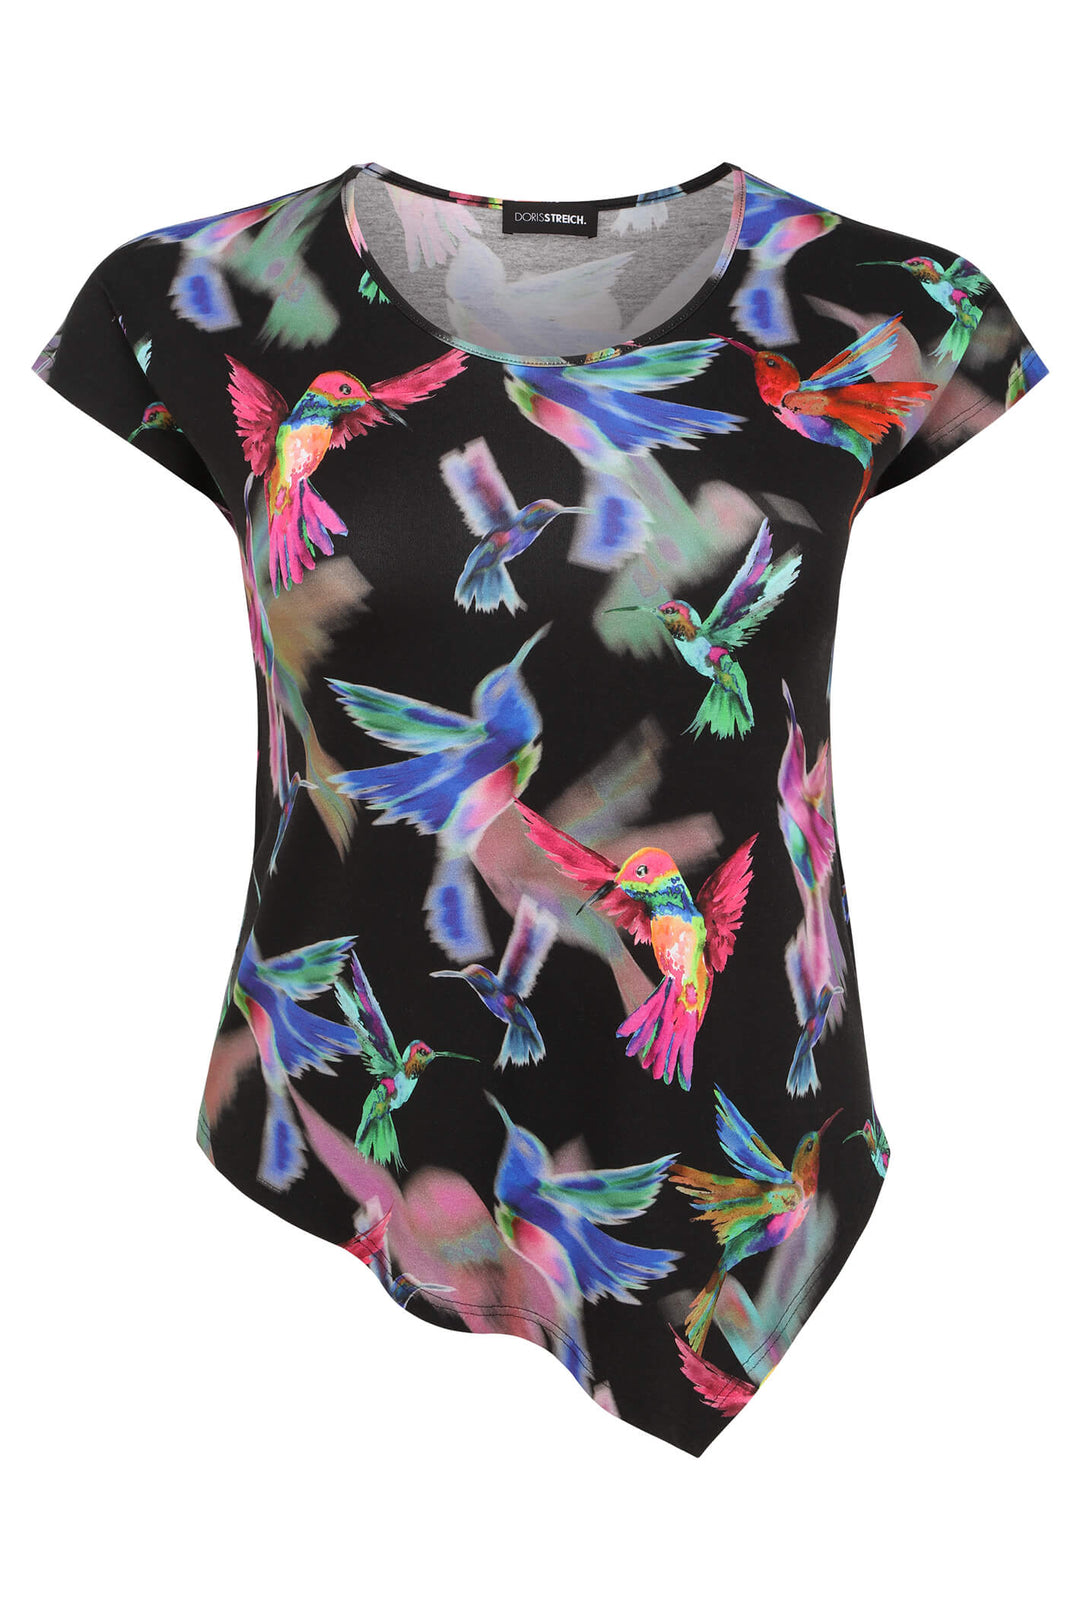 Doris Streich 501 556 98 Hummingbird Black Asymmetric T-Shirt - Shirley Allum Boutique